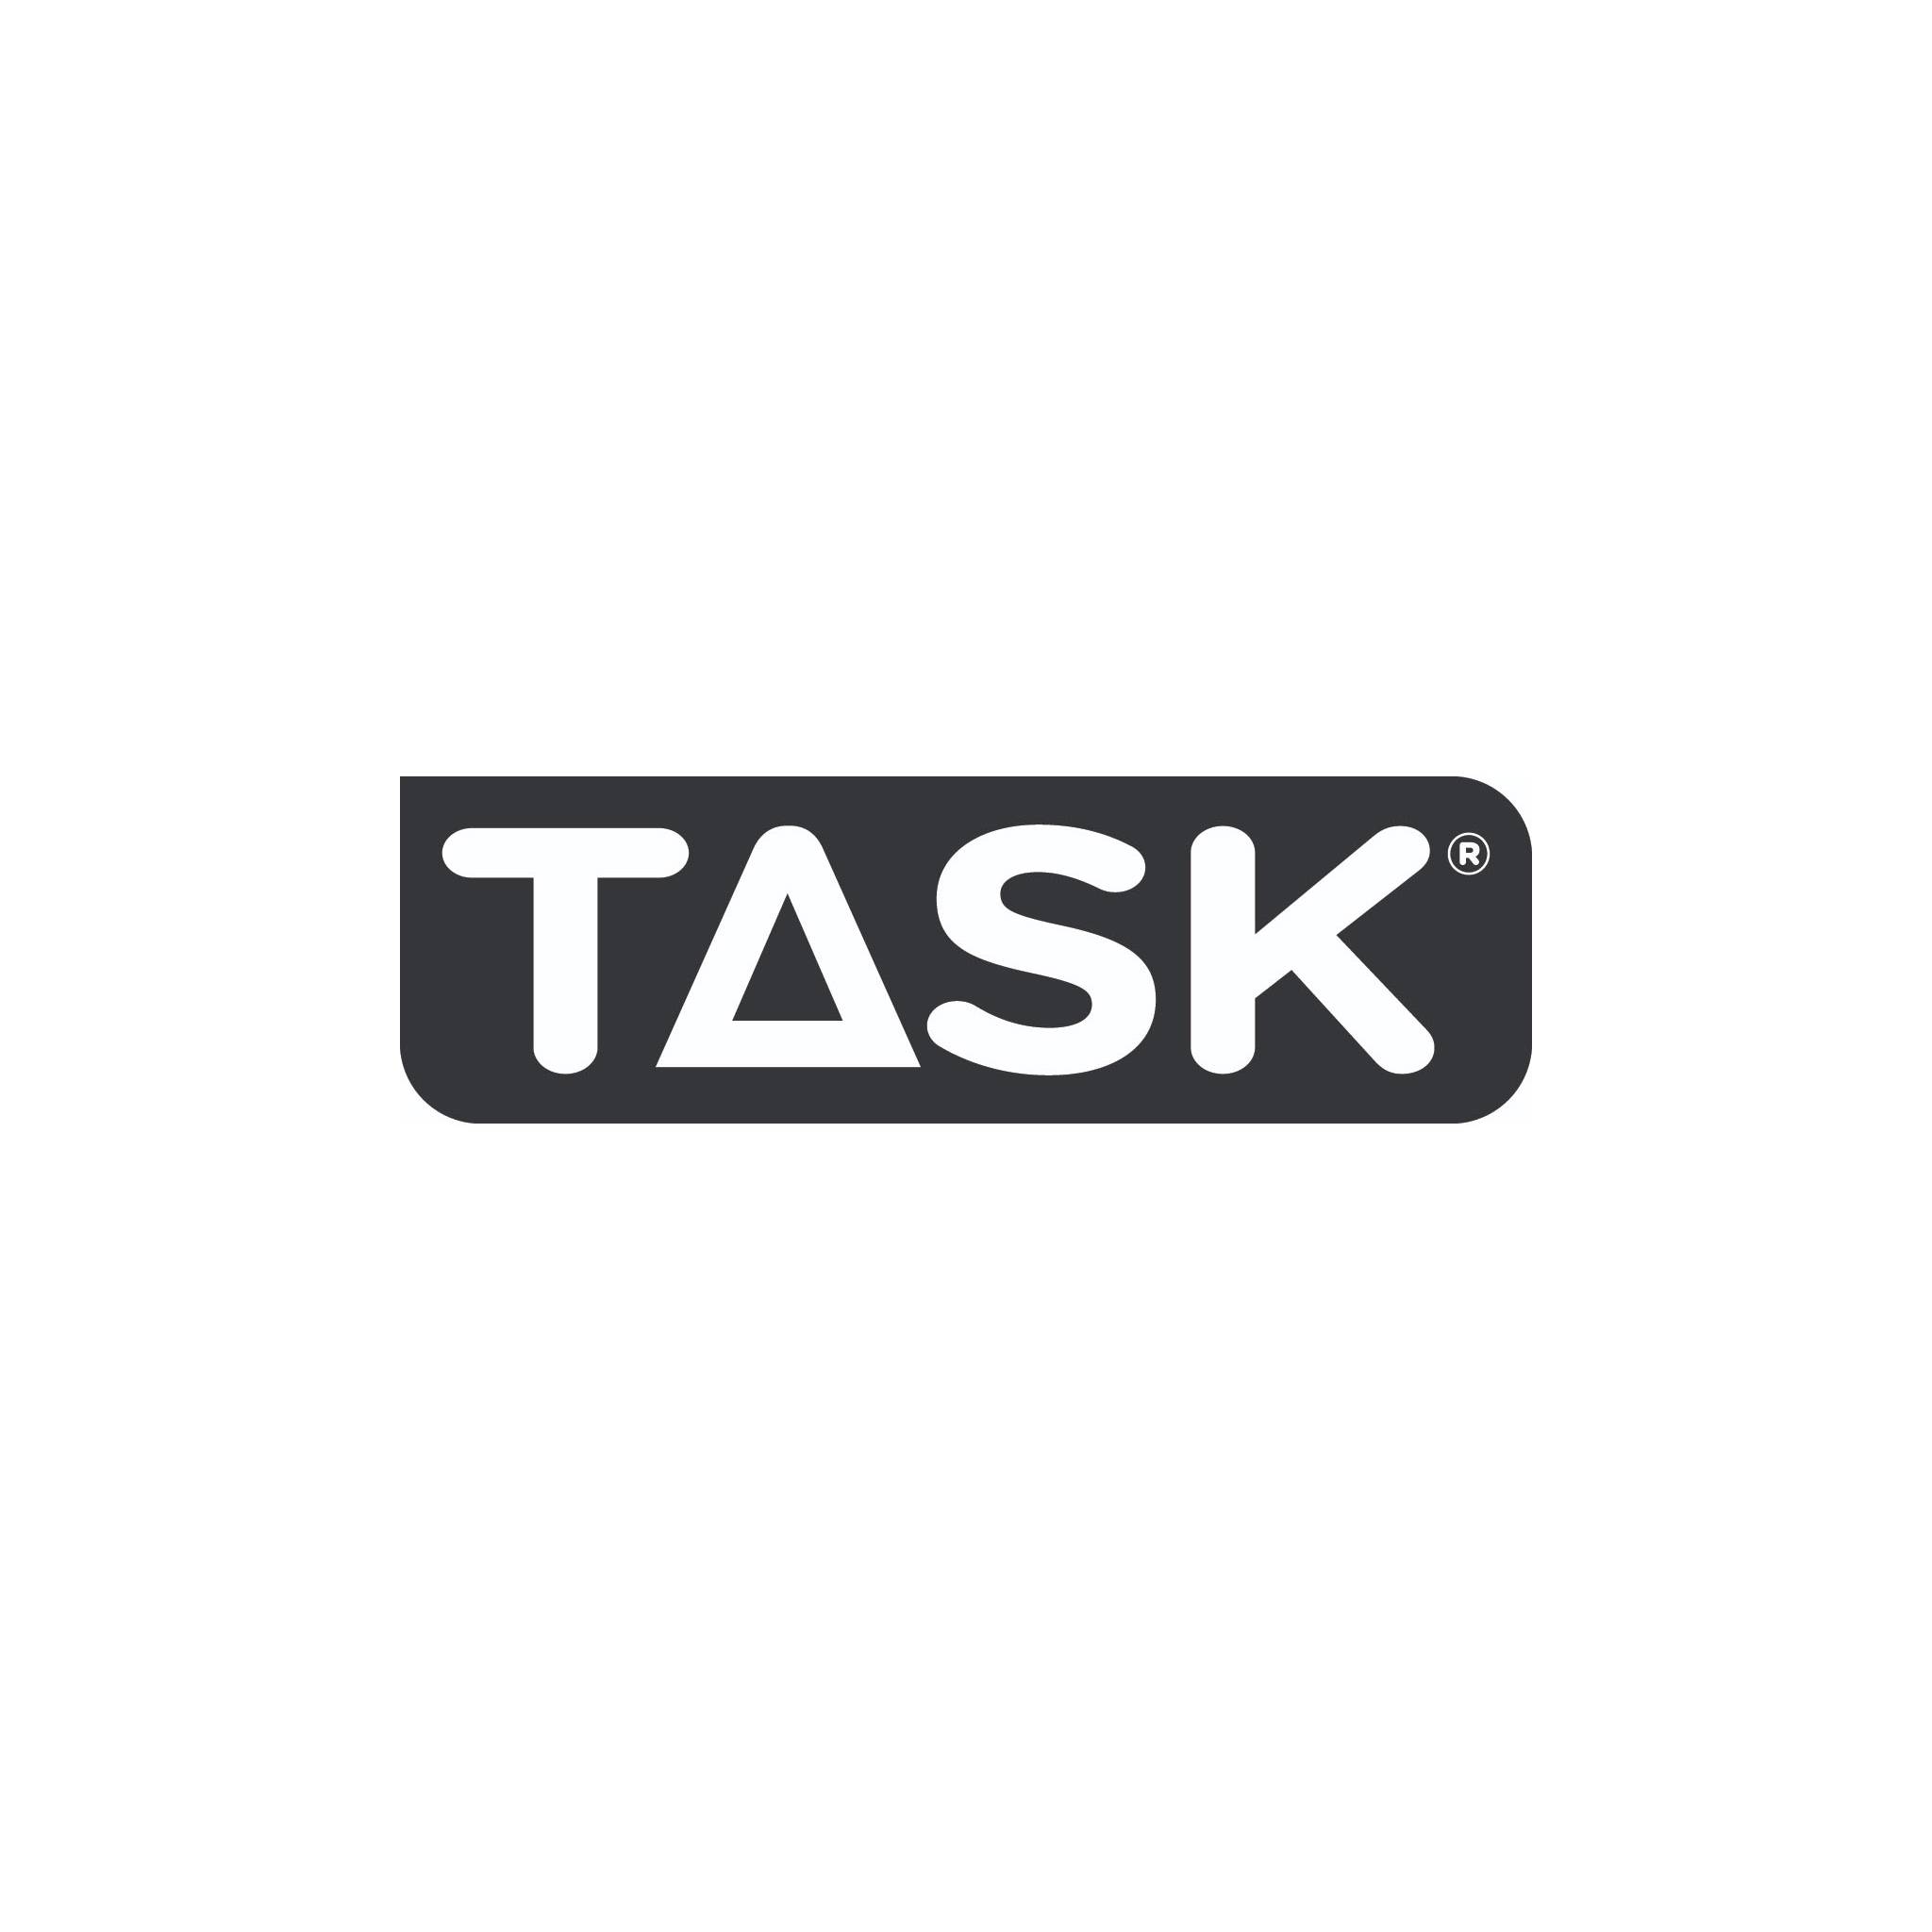 TASK logo